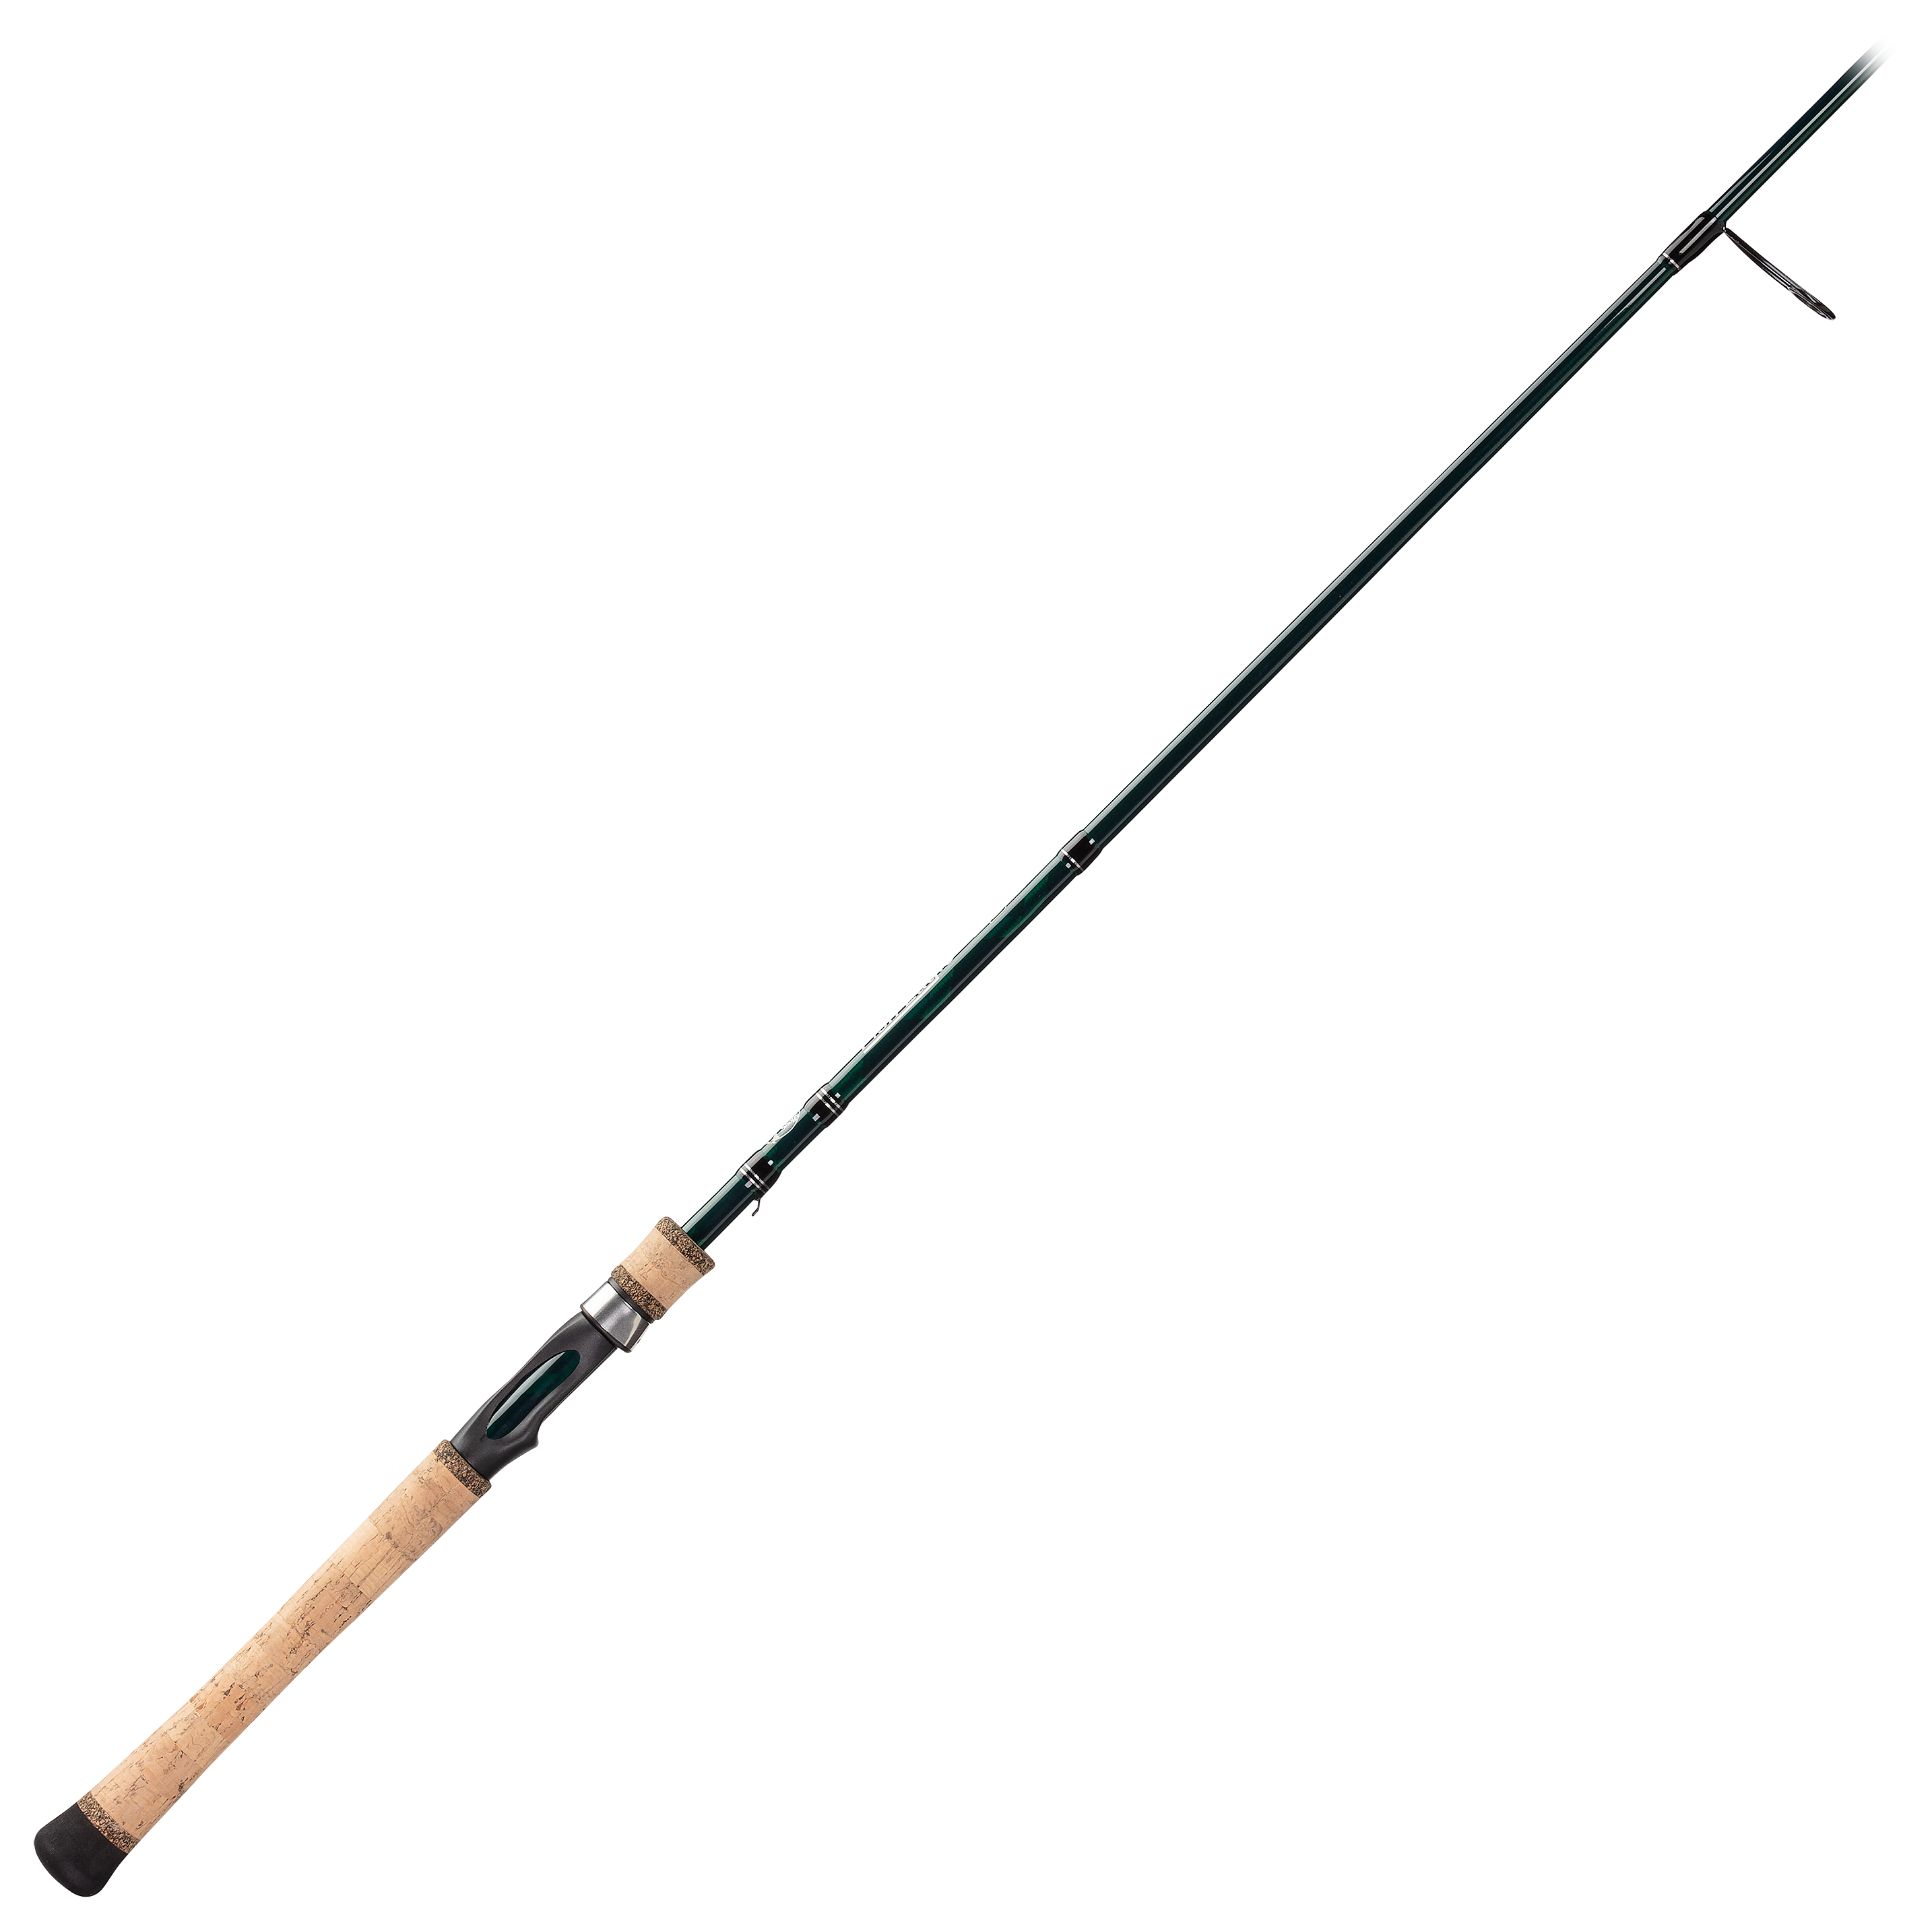 Daiwa professional fishing poles in portable